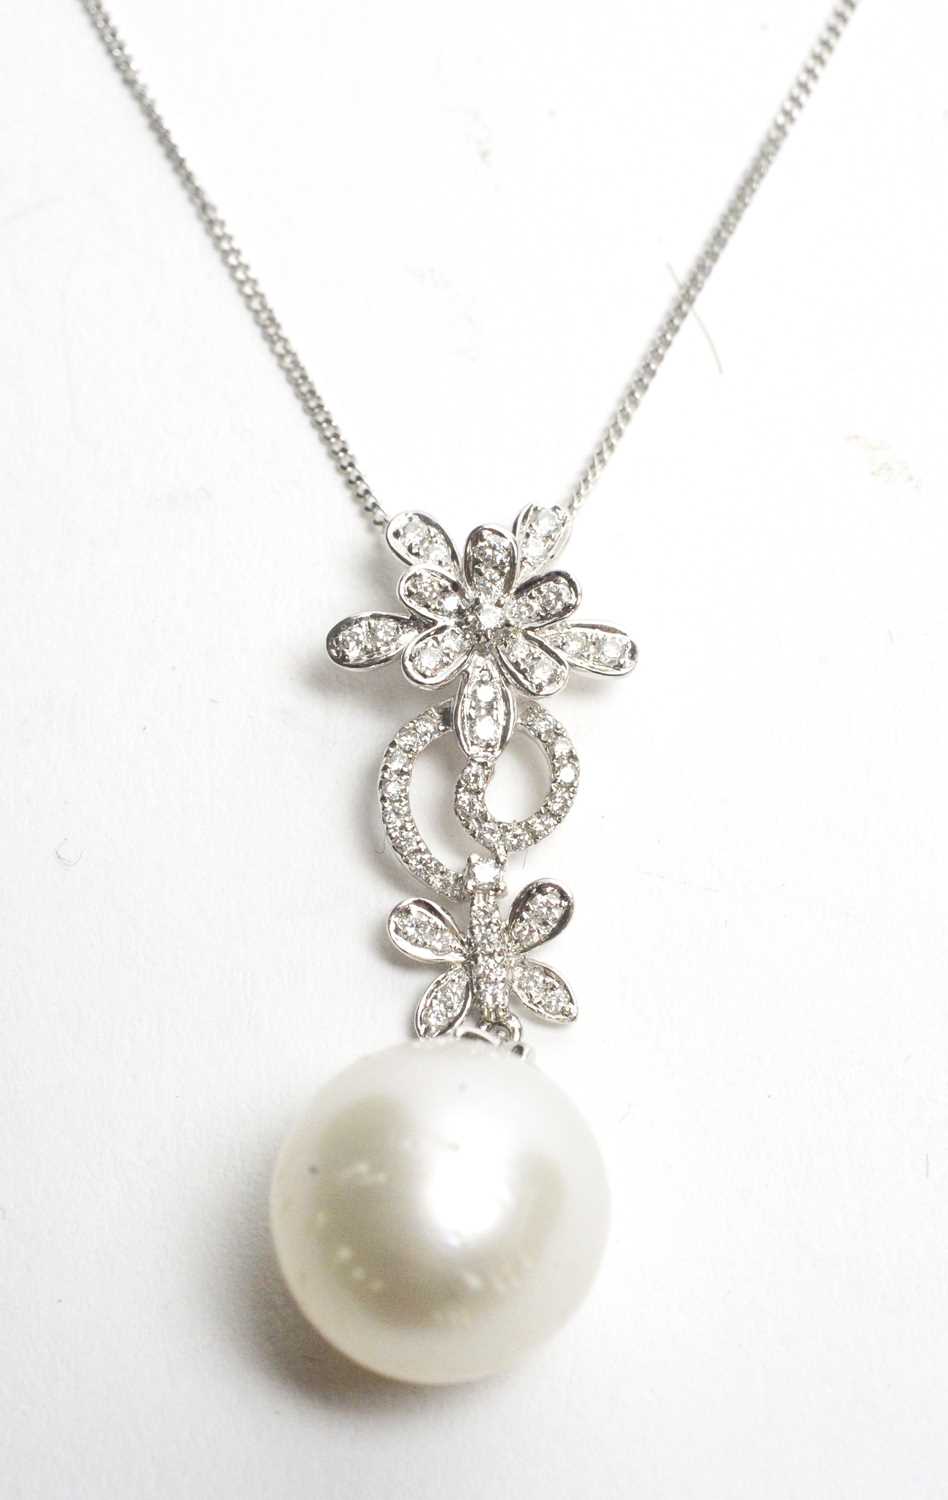 Lot 16 - A pearl and diamond pendant